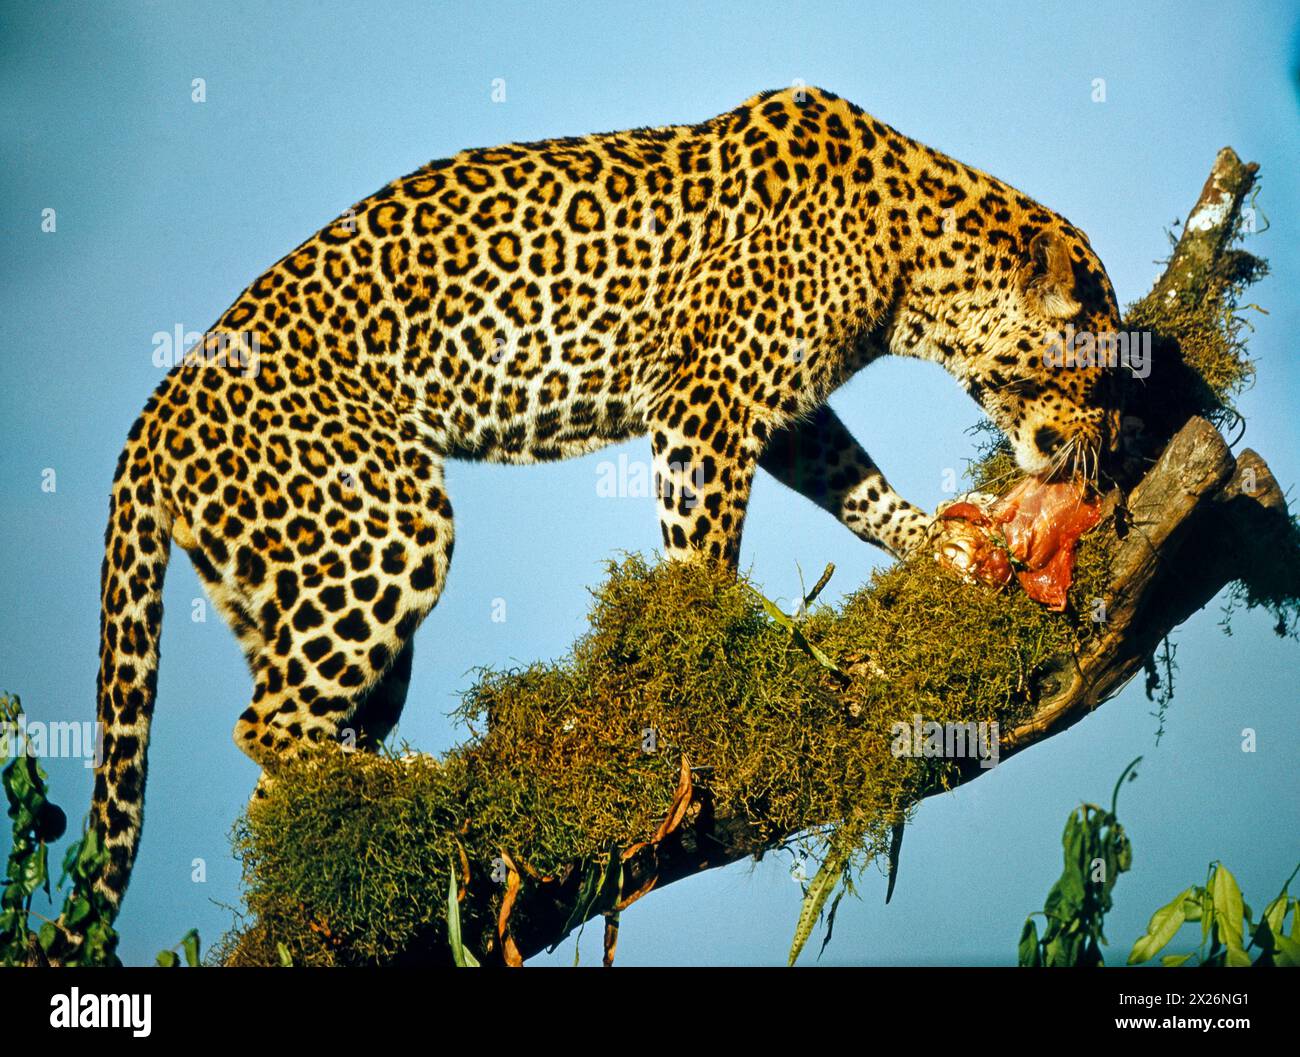 Leopard Hat Seine Jagdbeute in einem flechtenbehangenen Baum im Bergregenwald des Kilimandscharo vor Nahrungskonkurrenten gesichert. Leopard *** Leopard ha assicurato la sua preda in un albero coperto di licheni nella foresta pluviale di montagna del Kilimangiaro contro i concorrenti alimentari Leopard Foto Stock